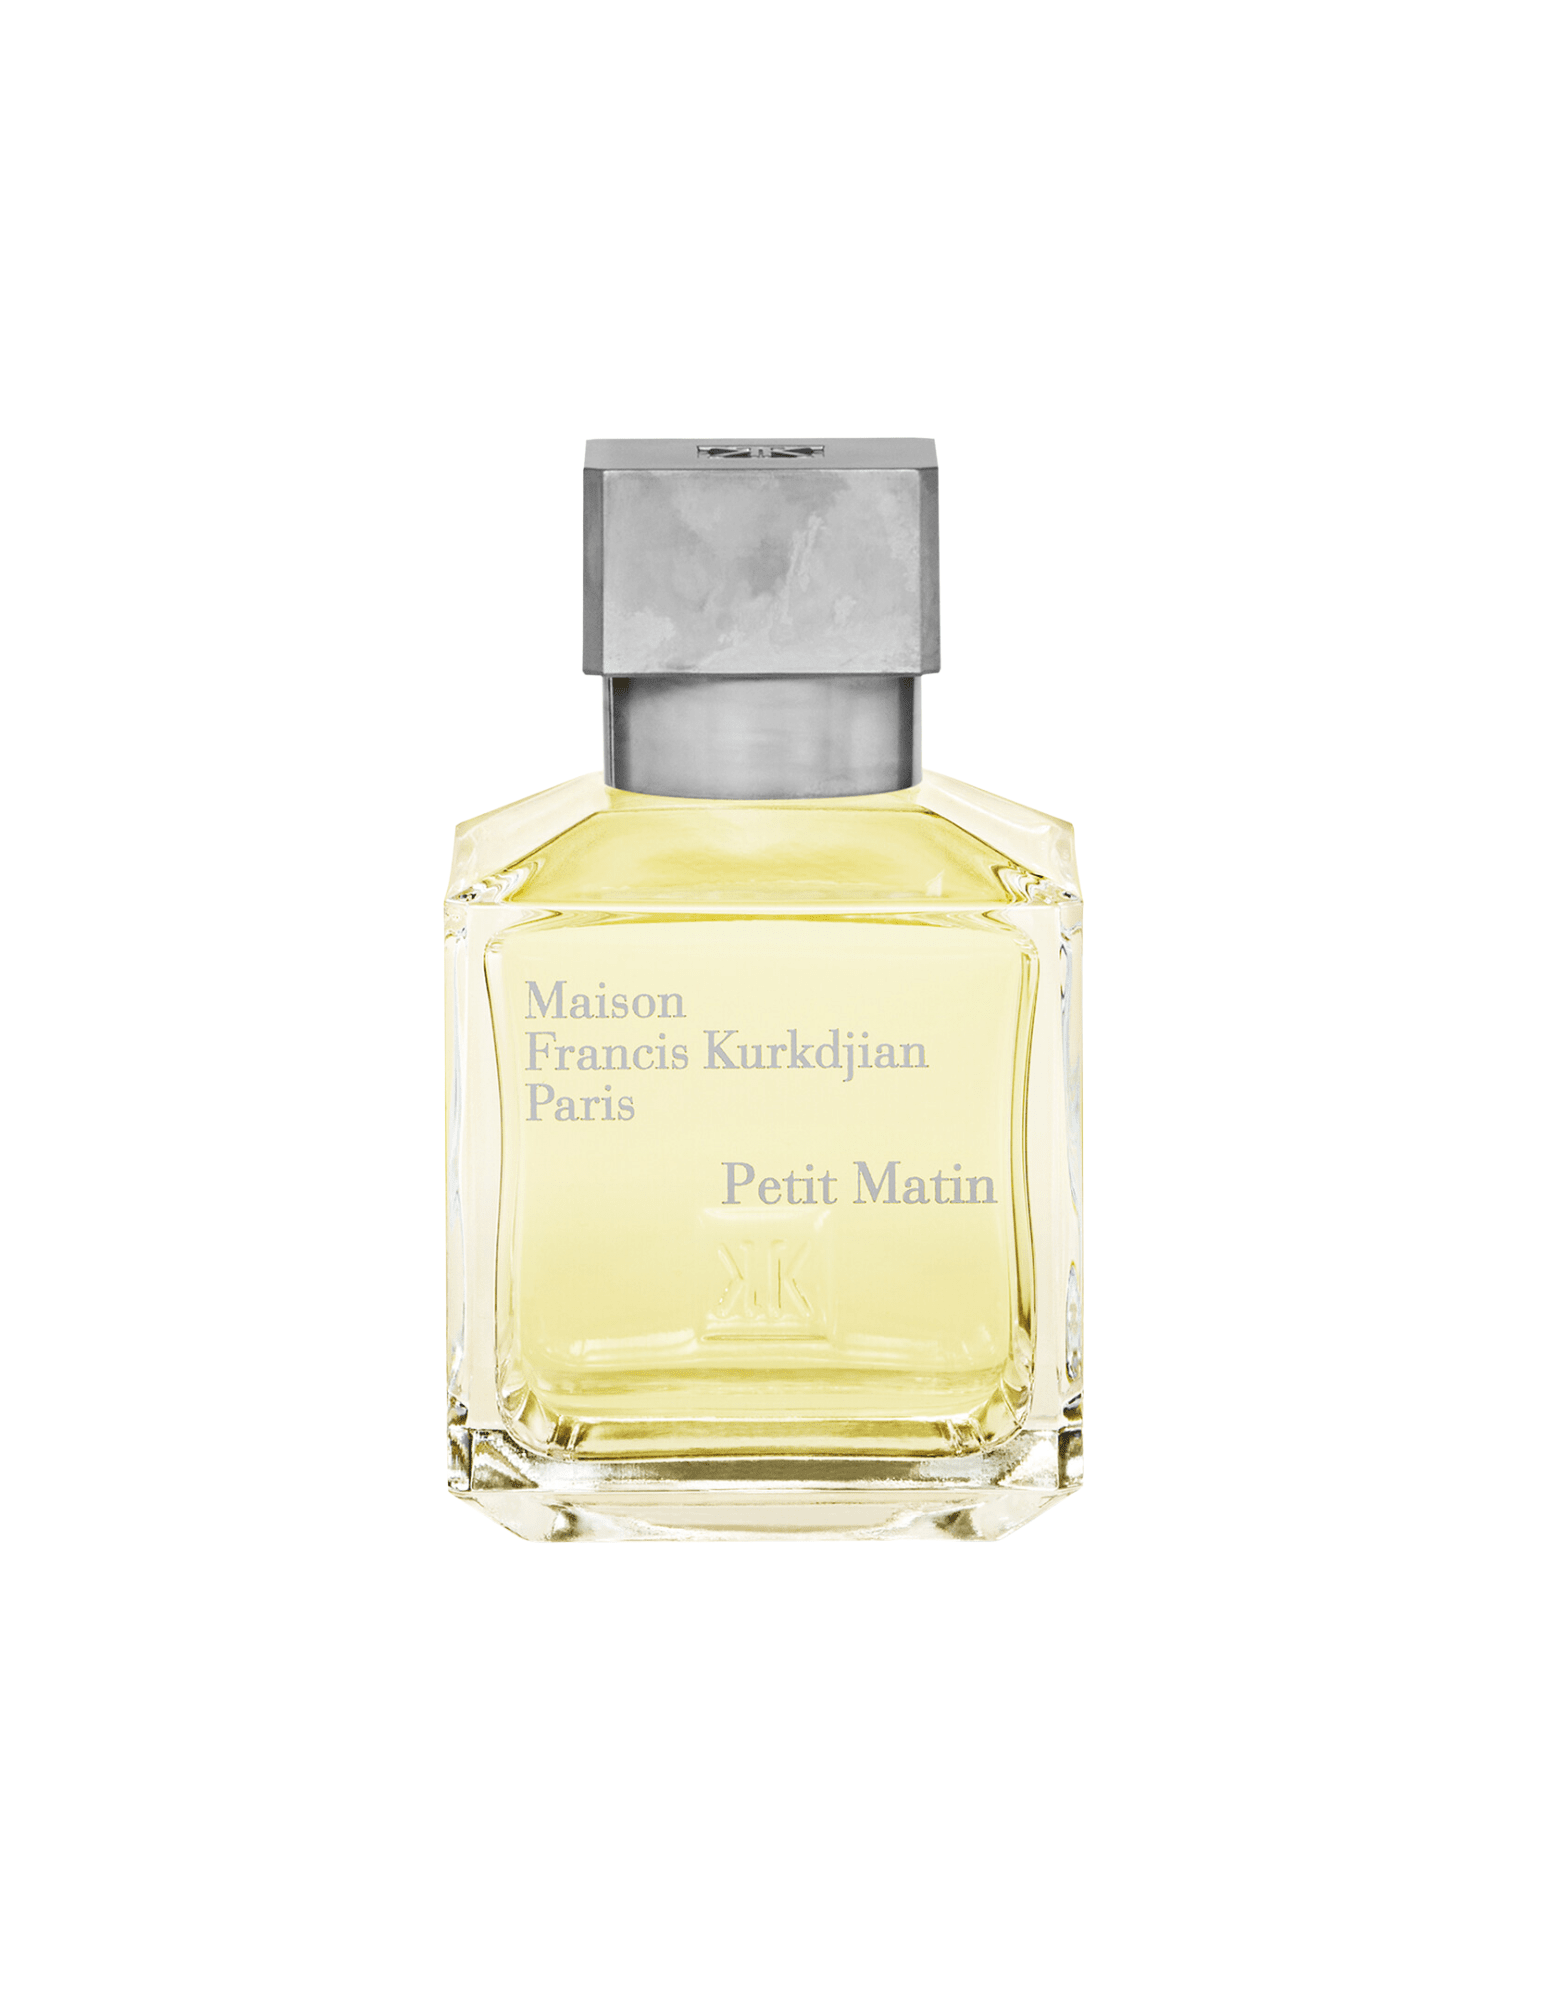 Maison Francis Kurkdjian Petit Matin Eau de Parfum 2.4 fl oz.